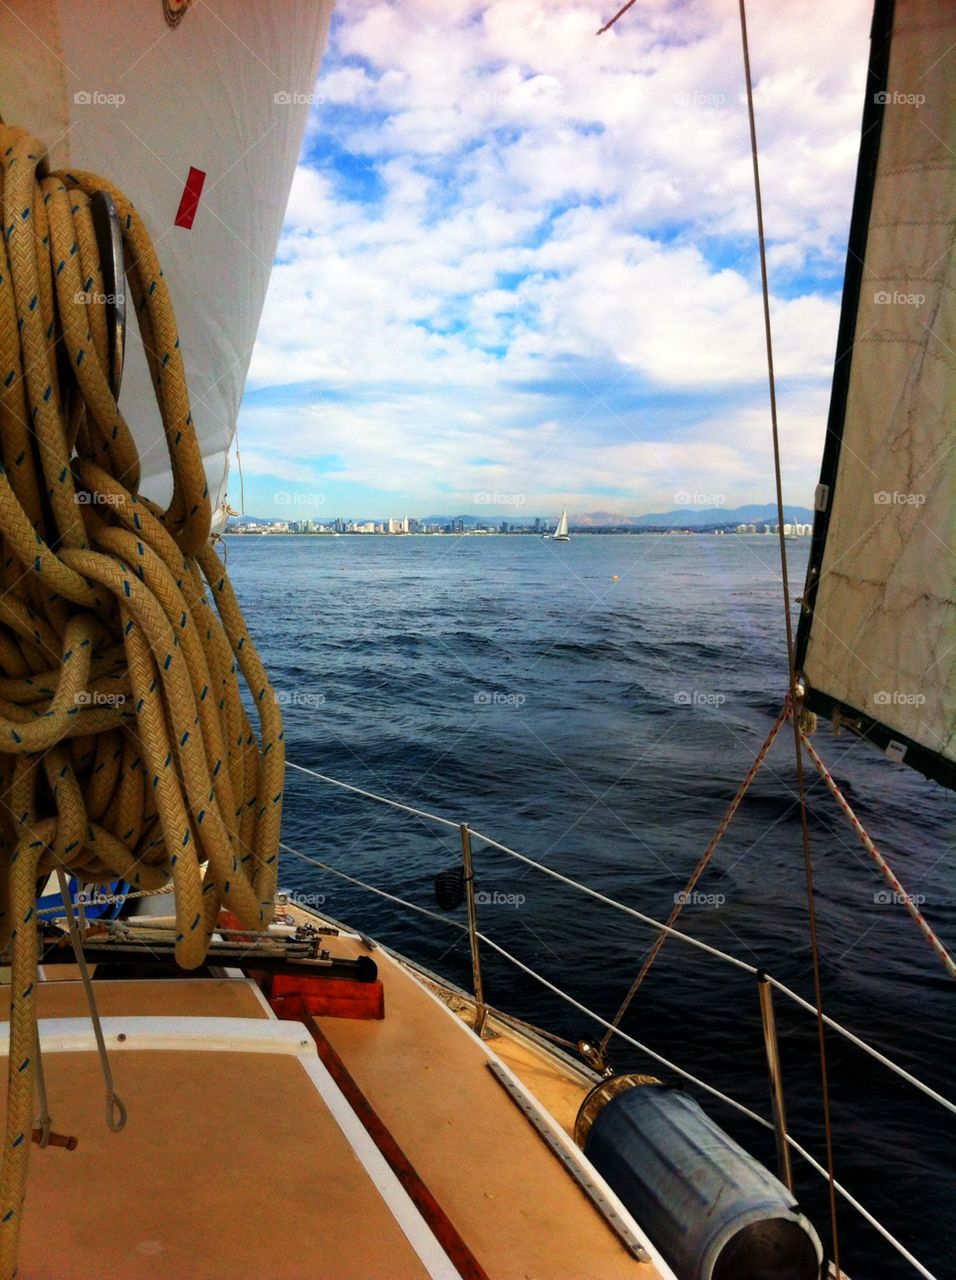 Sailing on the San Diego bay